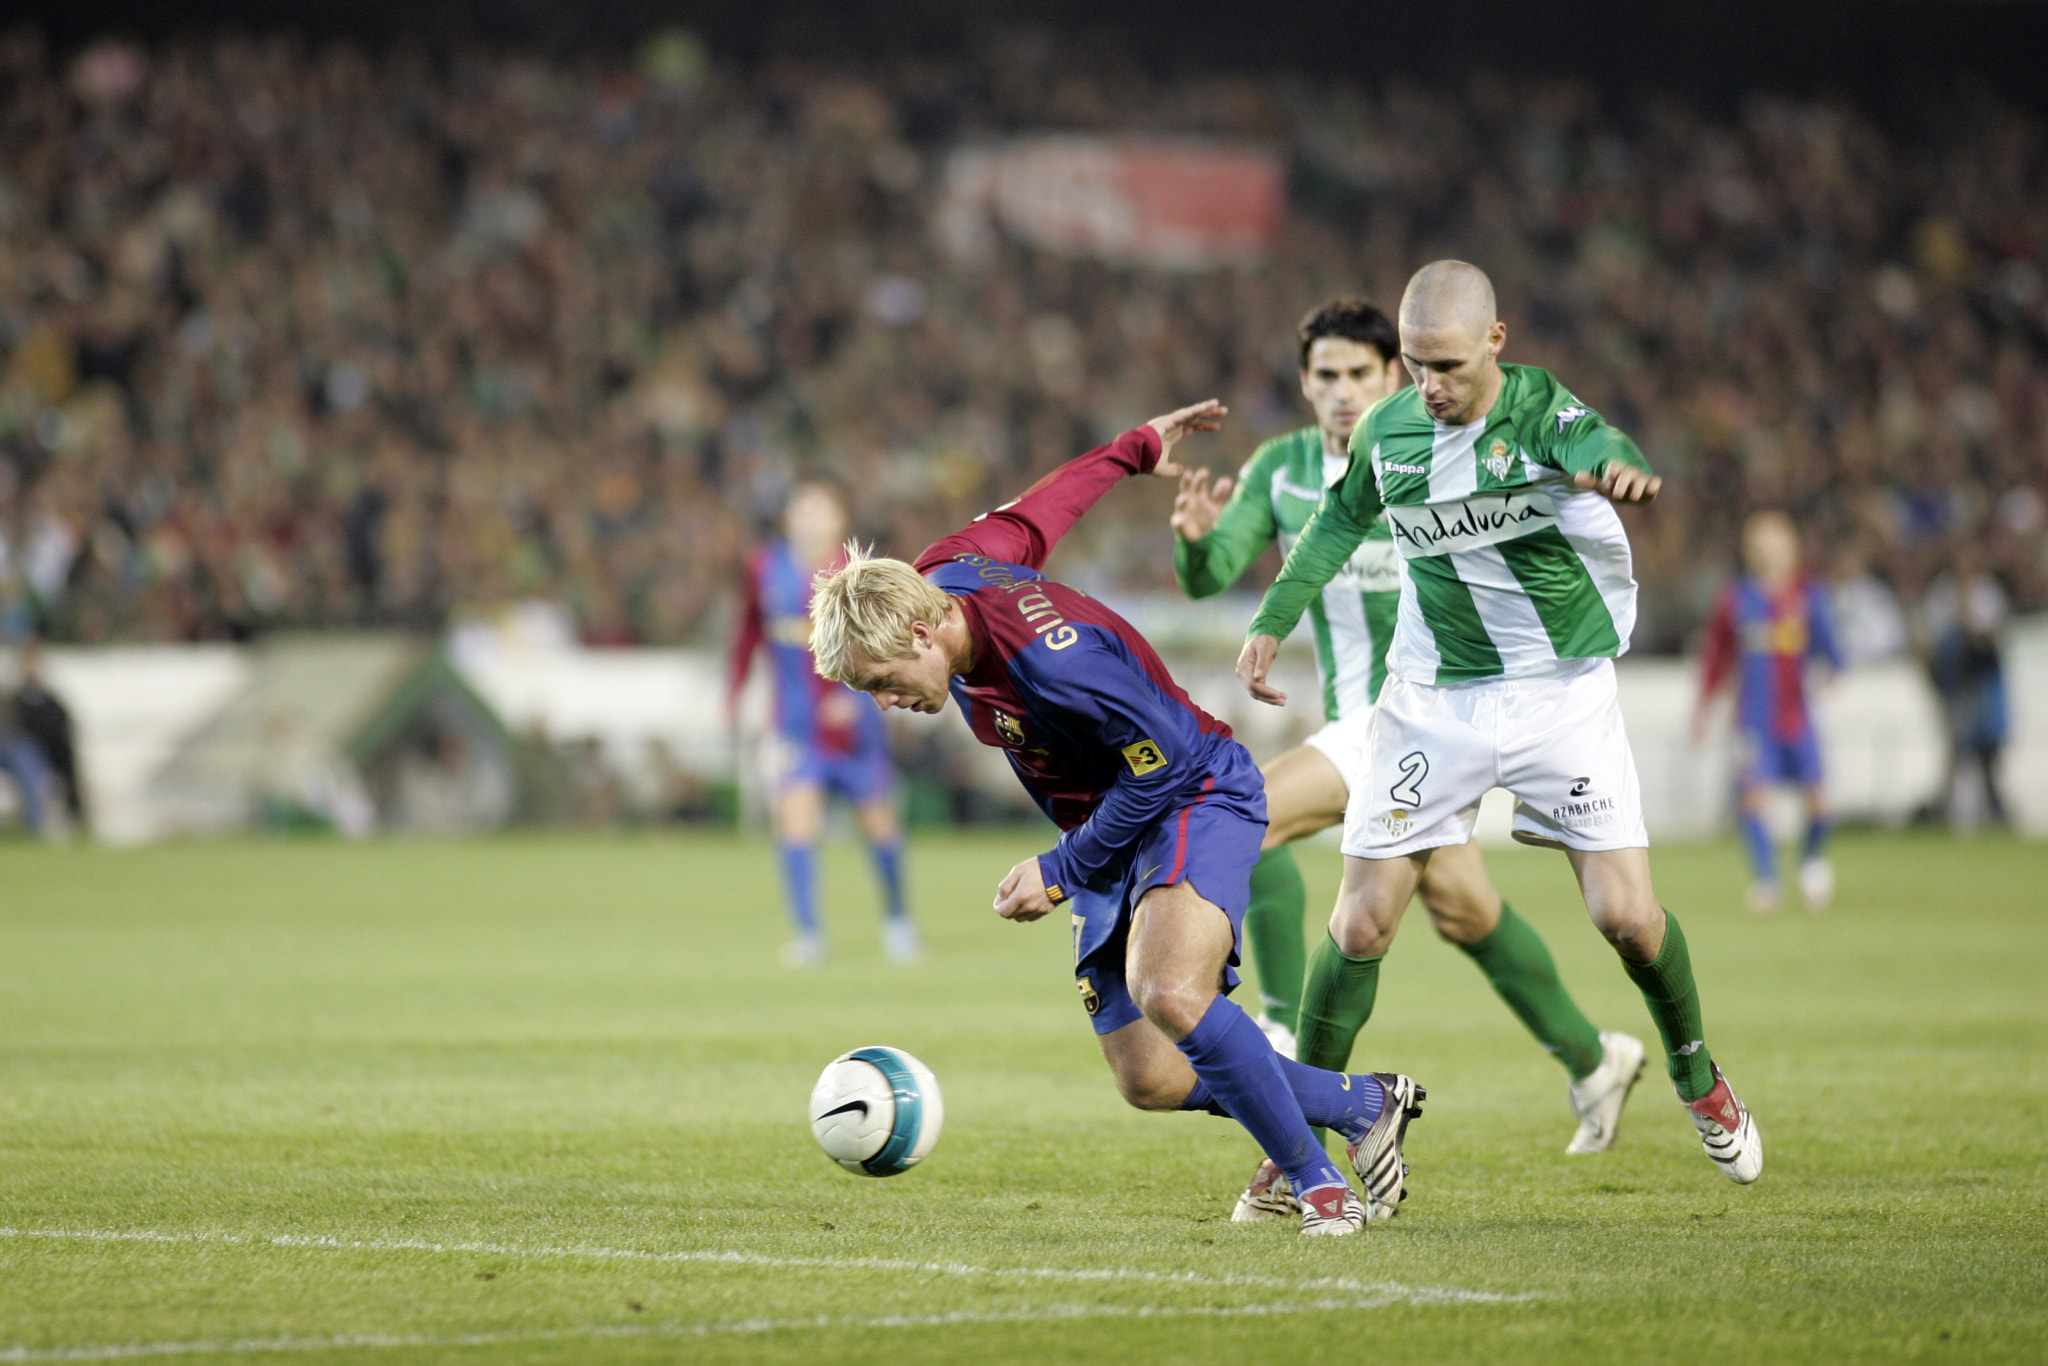 Gudjhonsen with the ball. Taken at Ruiz de Lopera stadium (Seville, Spain), during the Spanish Liga